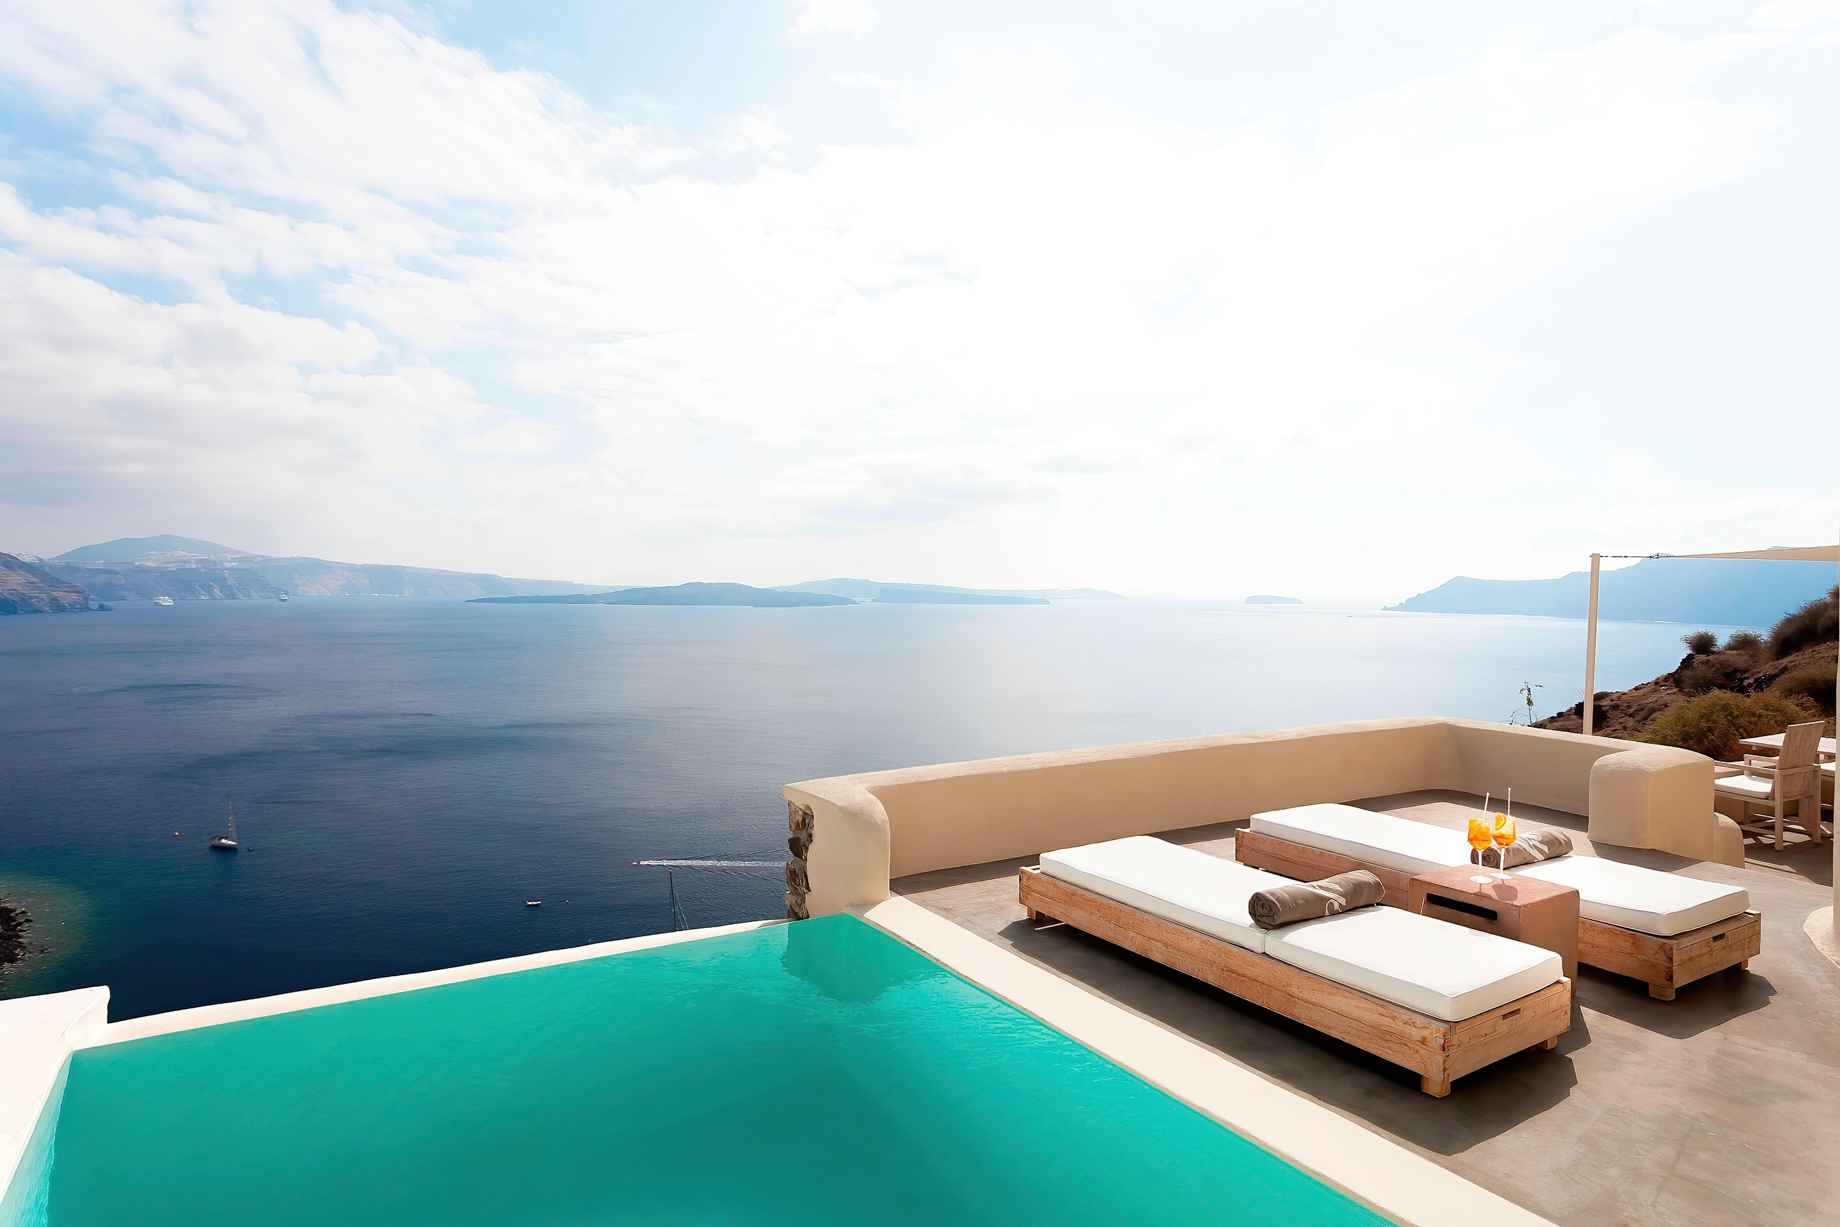 Mystique Hotel Santorini – Oia, Santorini Island, Greece – Mystery Villa Private Ocean View Pool Deck